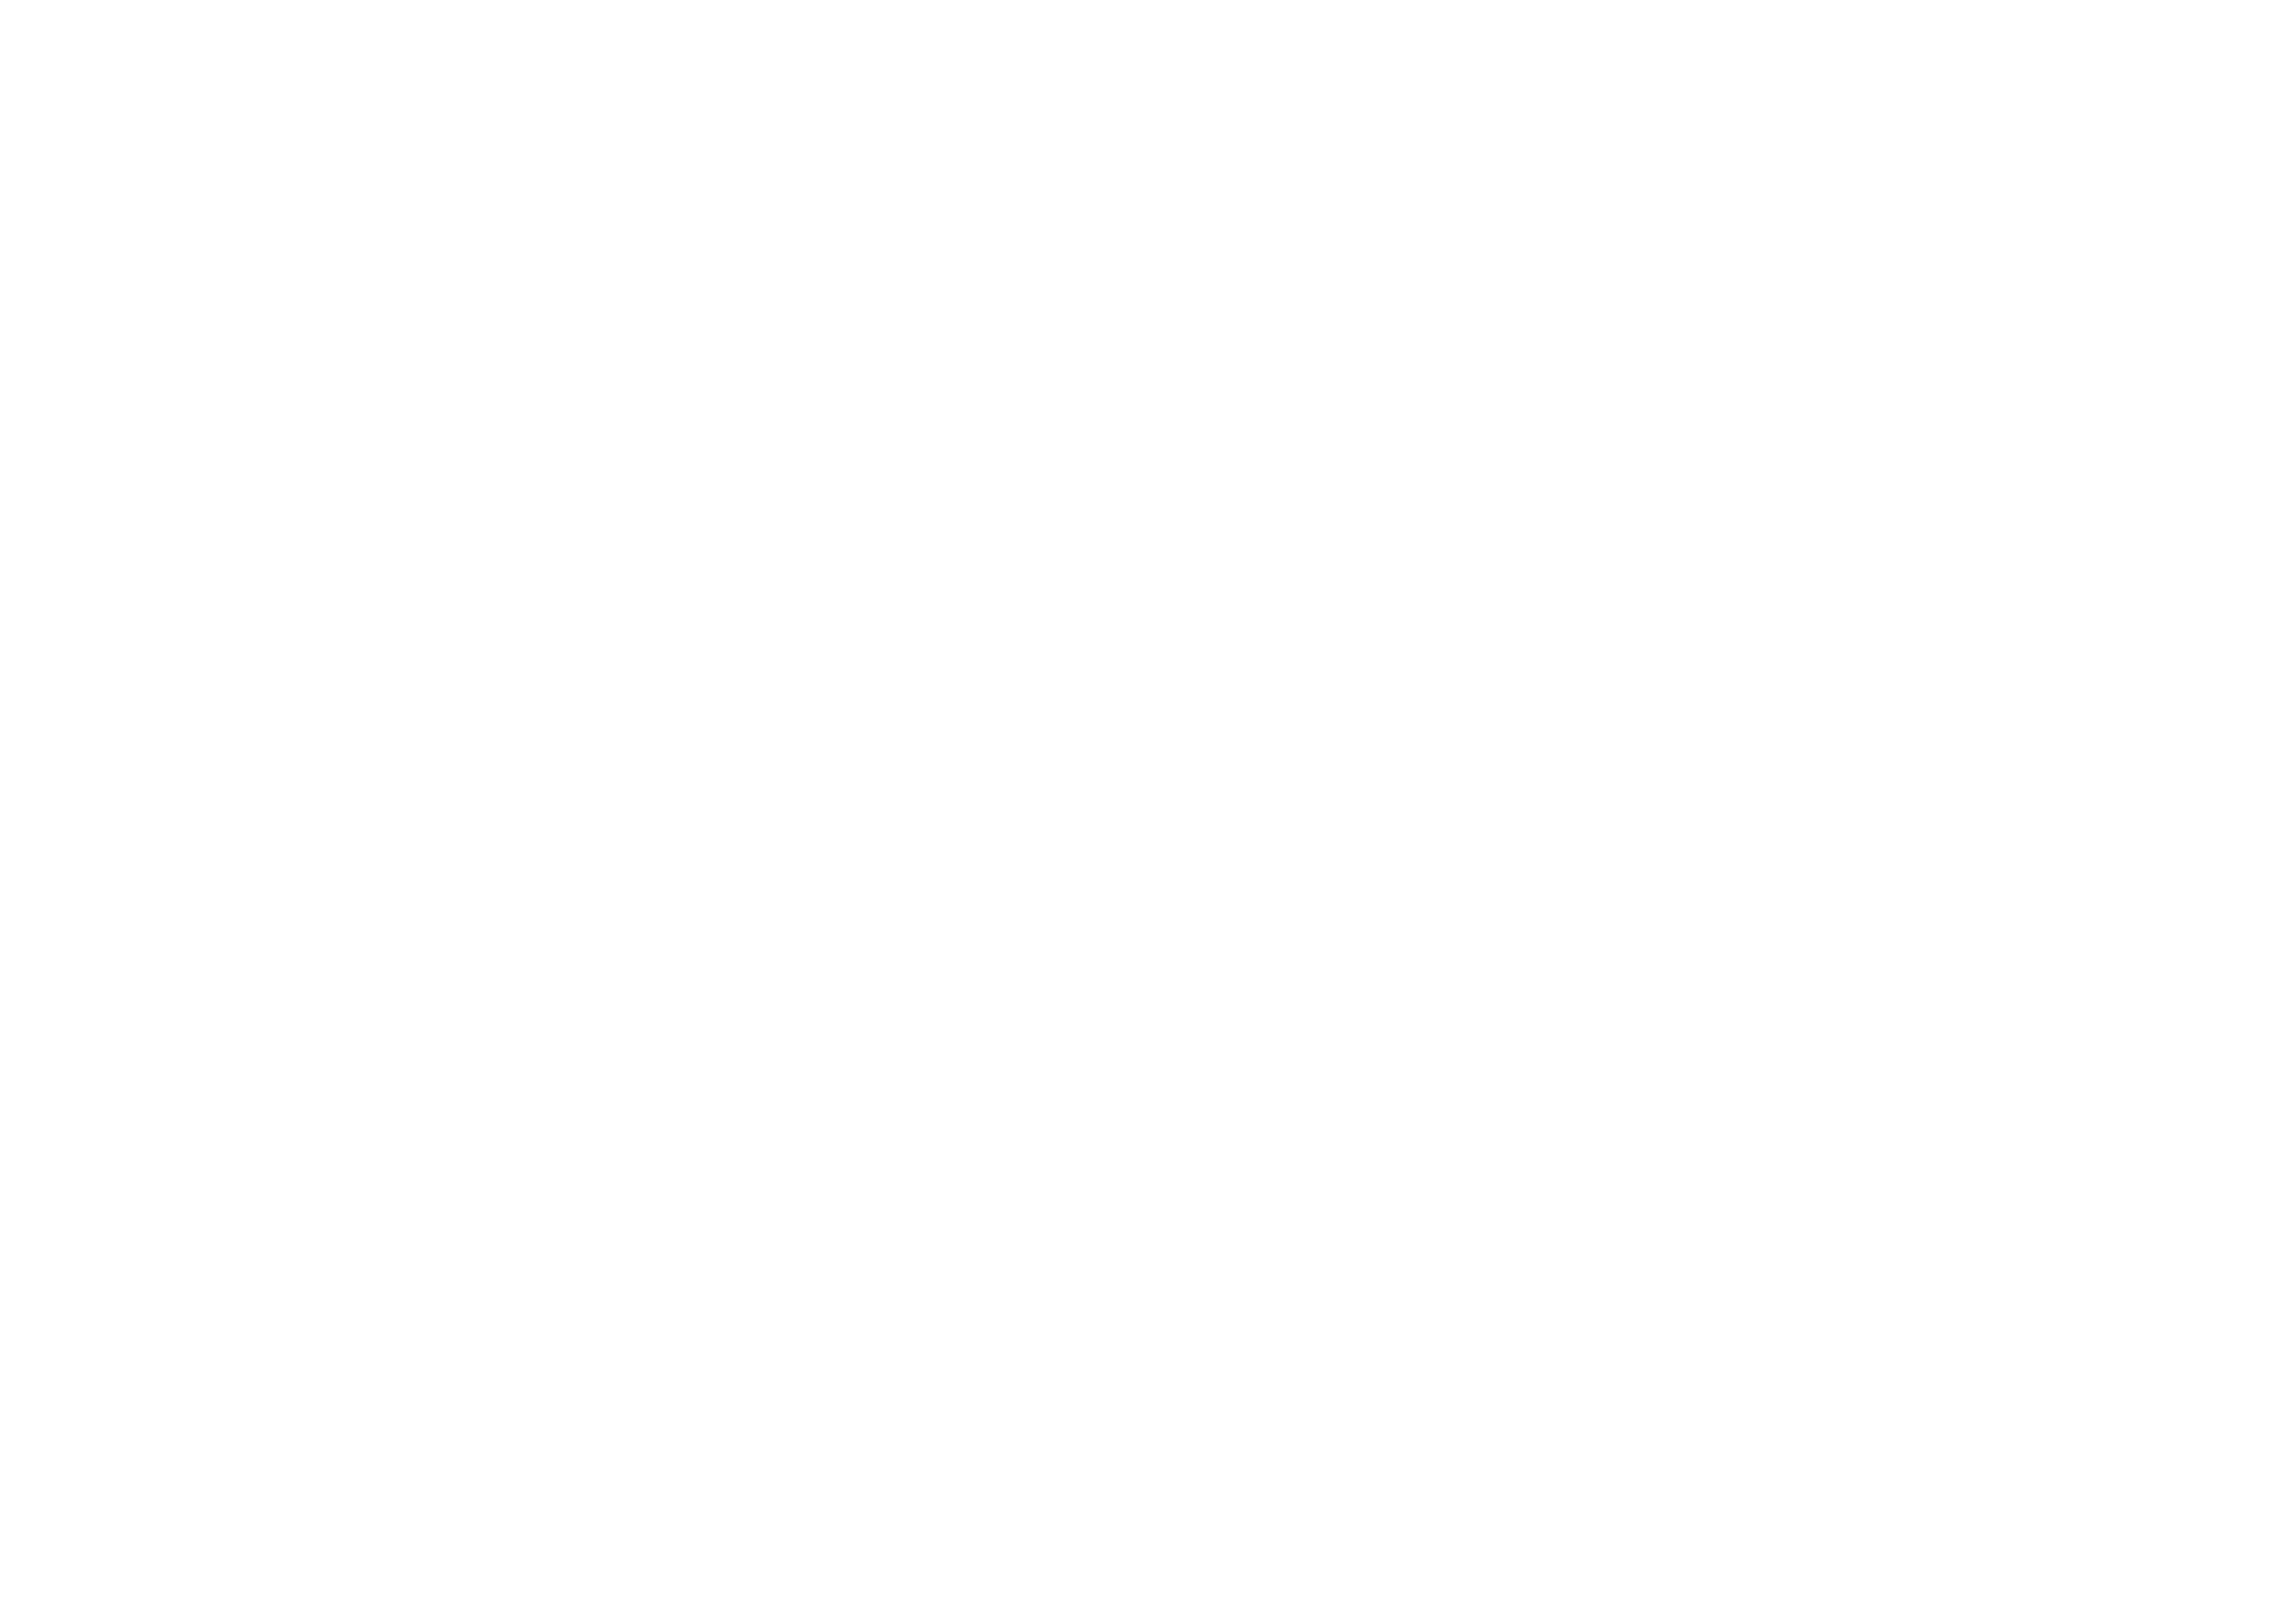 BetterBond Logo